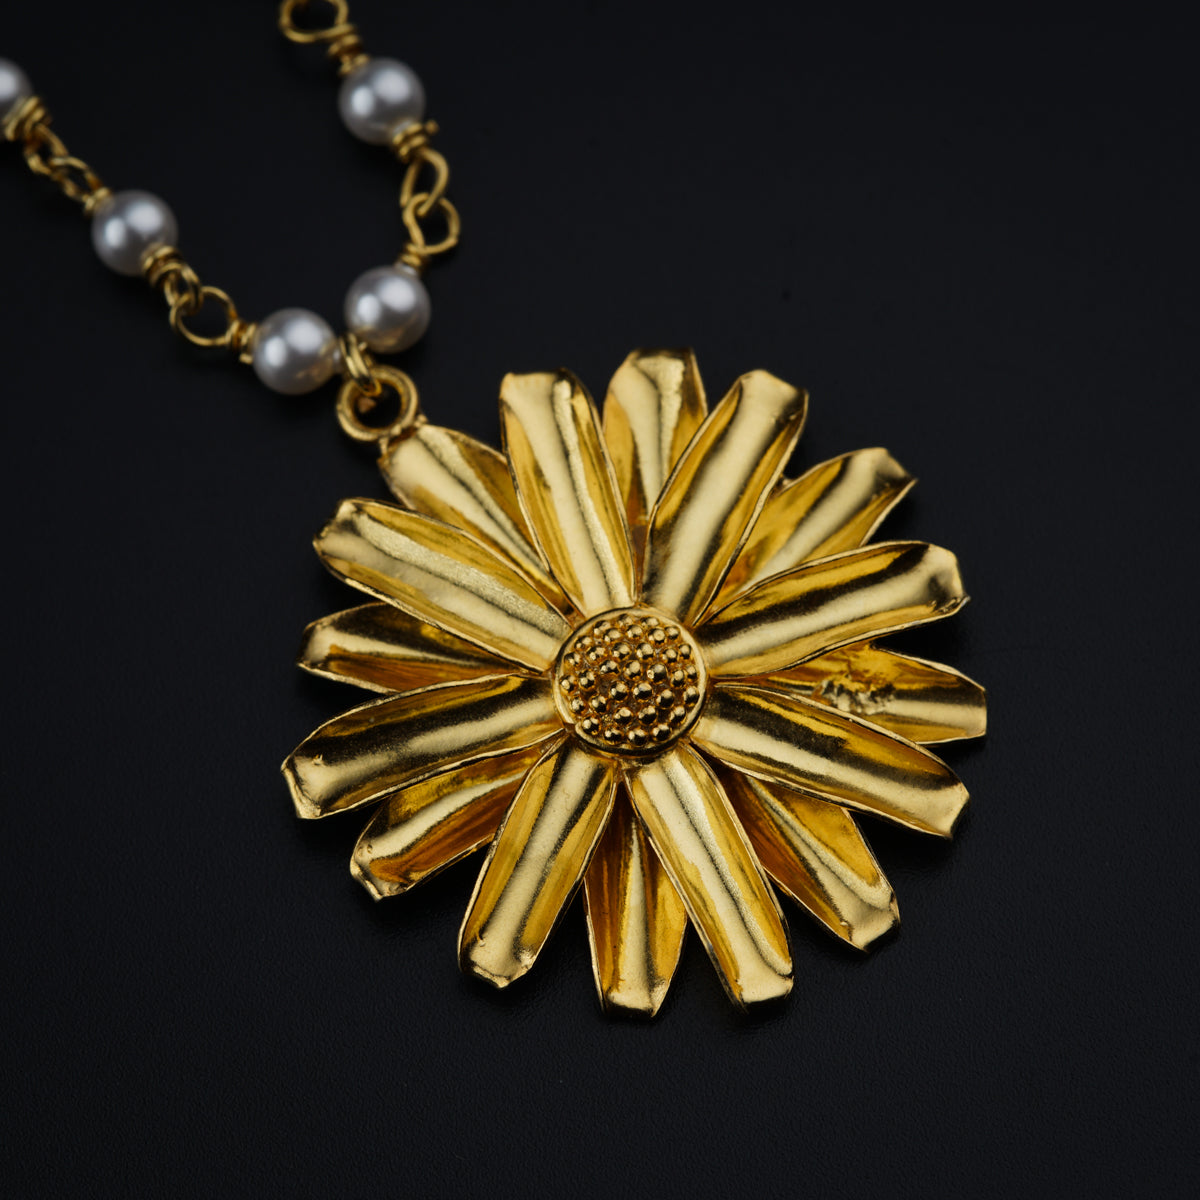 Golden Bloom Pearl Necklace- Medium length